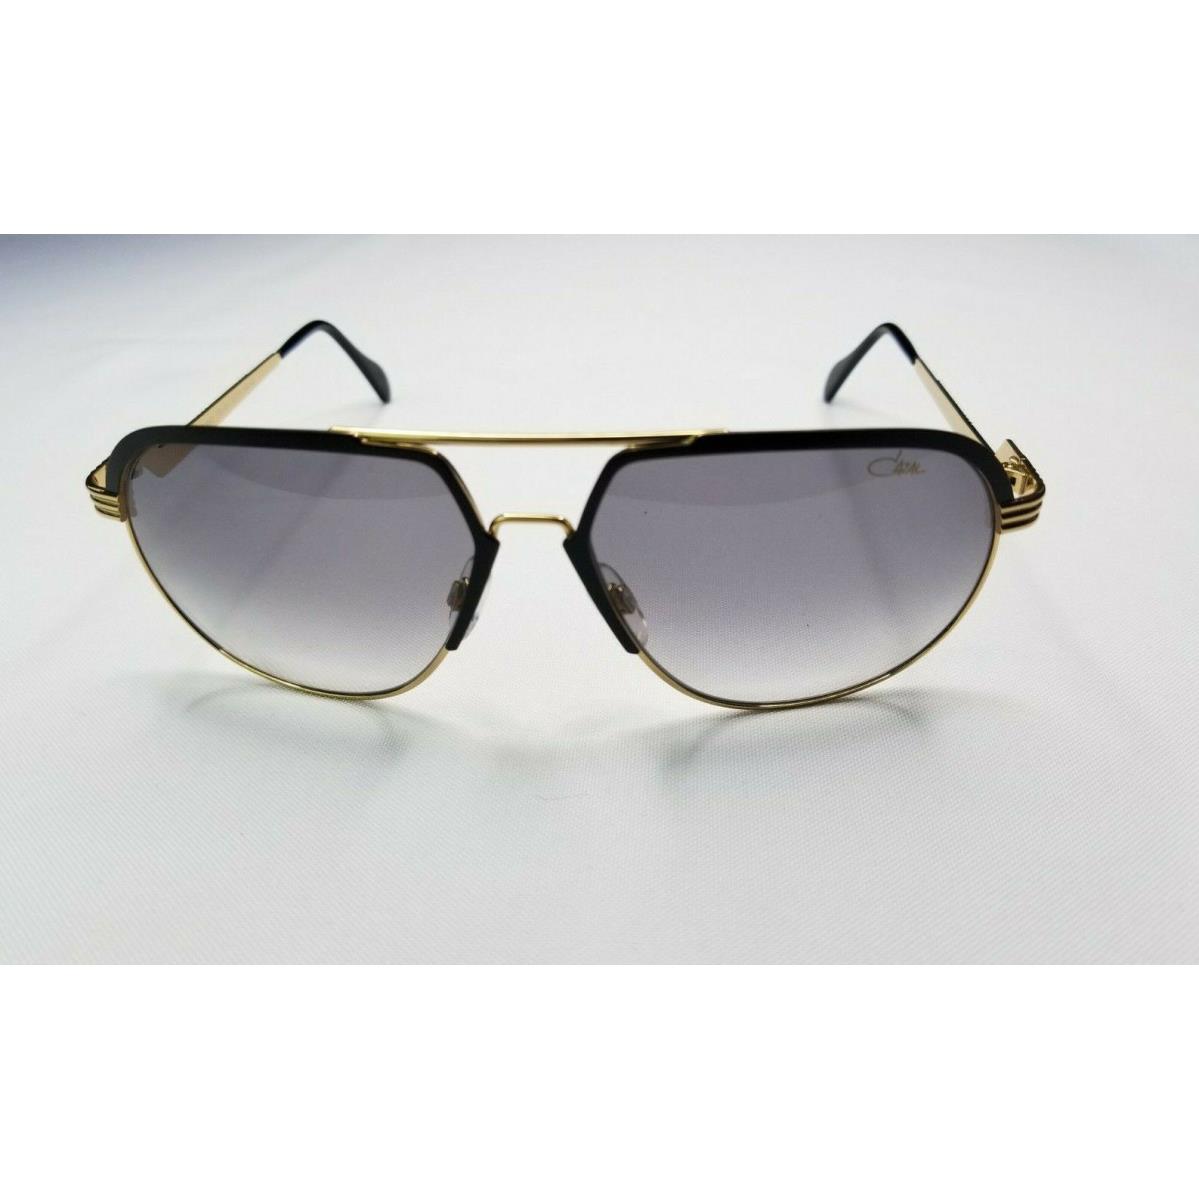 Cazal Mod. 9083 Col. 001 Black Gold Plated Aviator Sunglasses Made